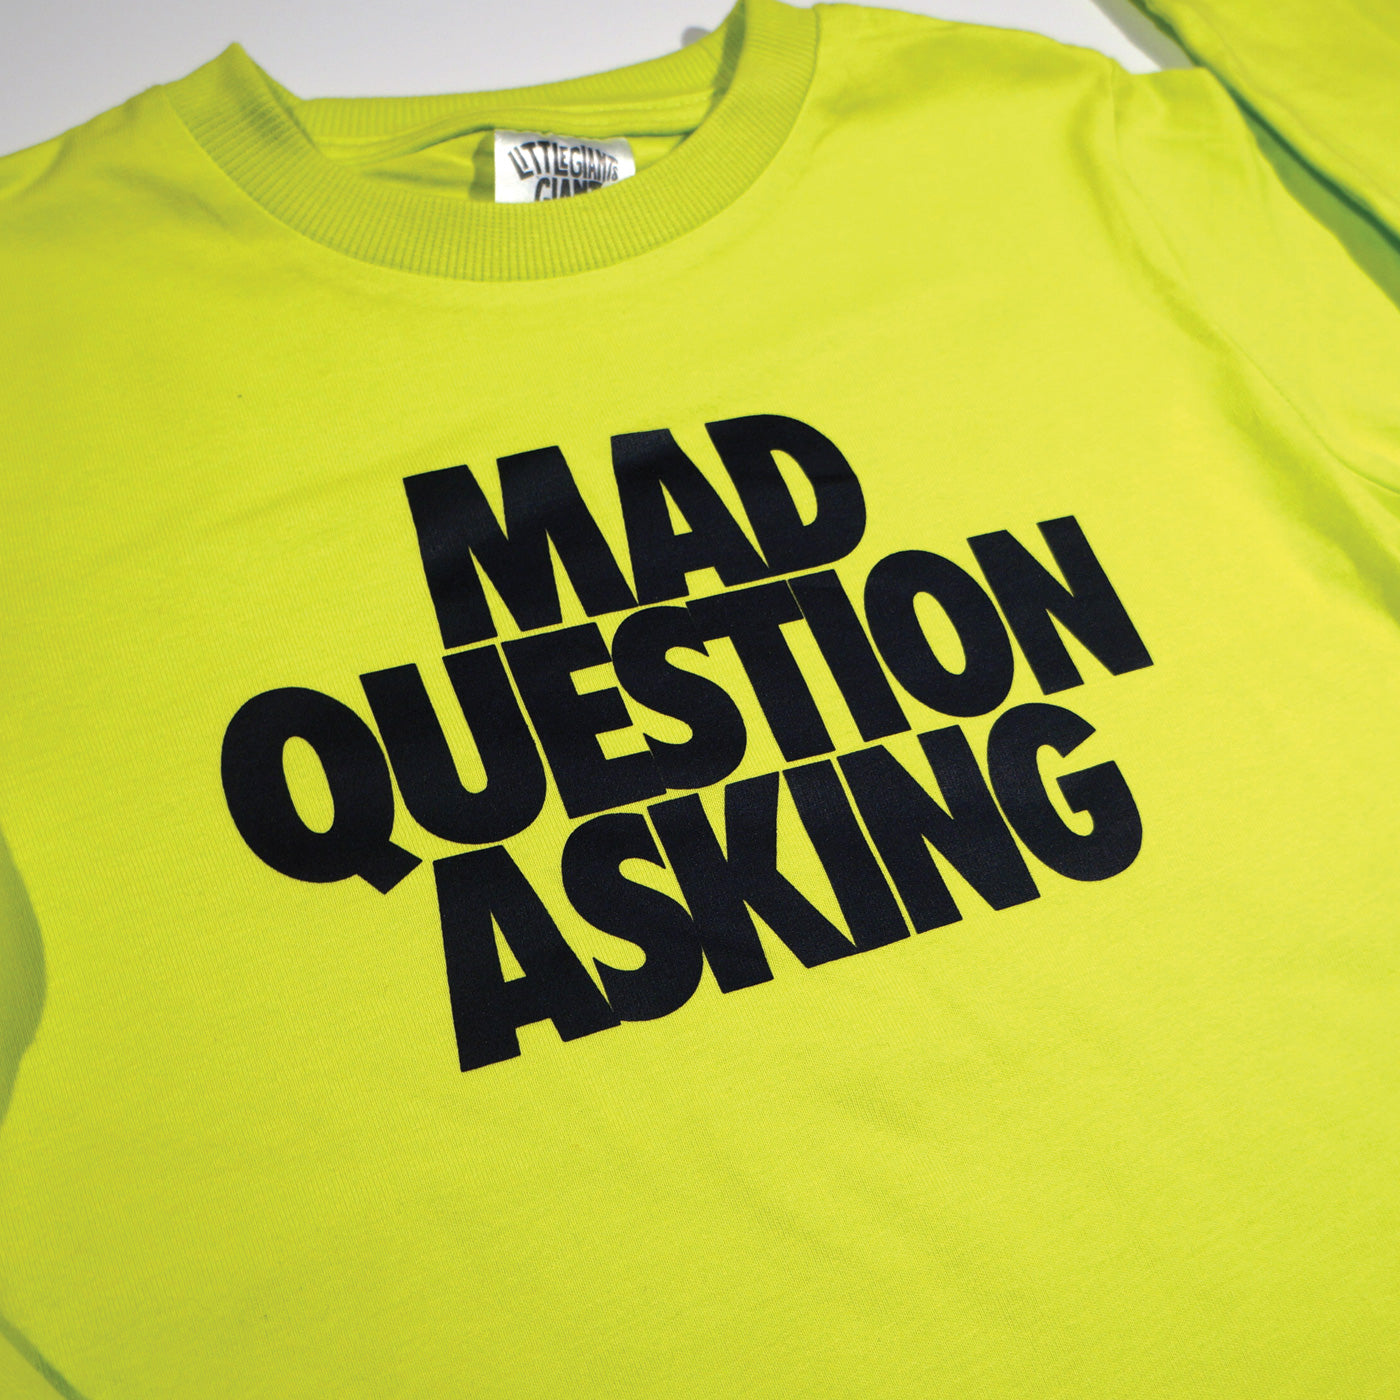 Mad Question Asking Long T-Shirt (Volt)